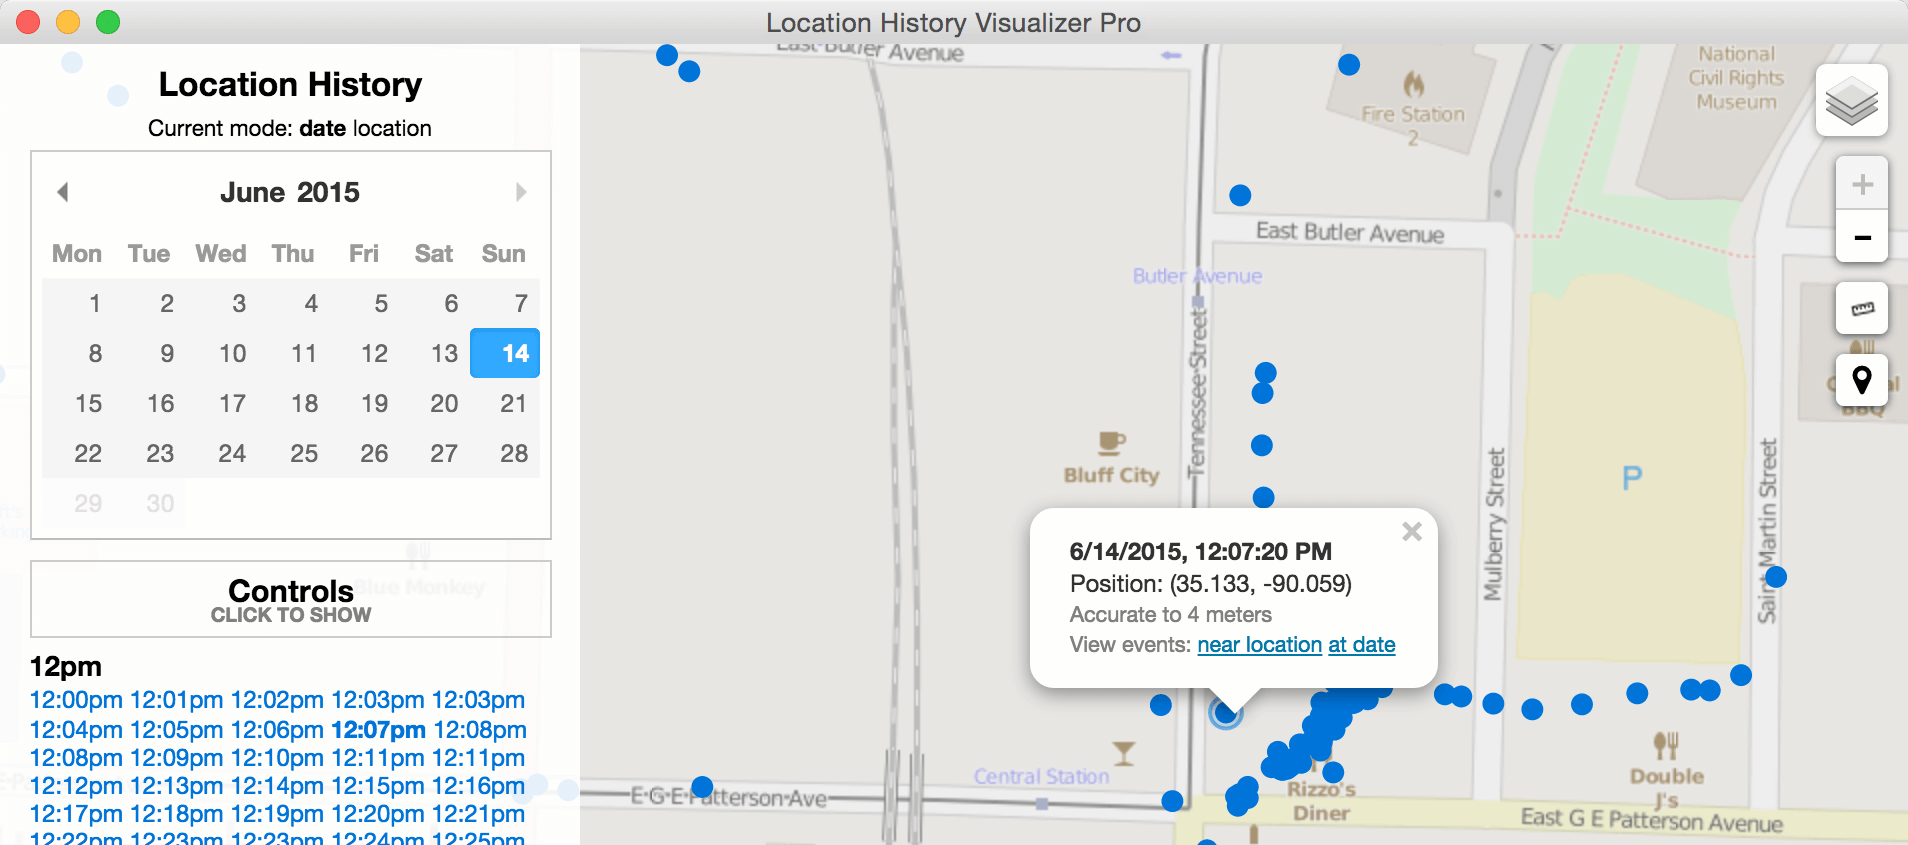 Location History Visualizer Pro